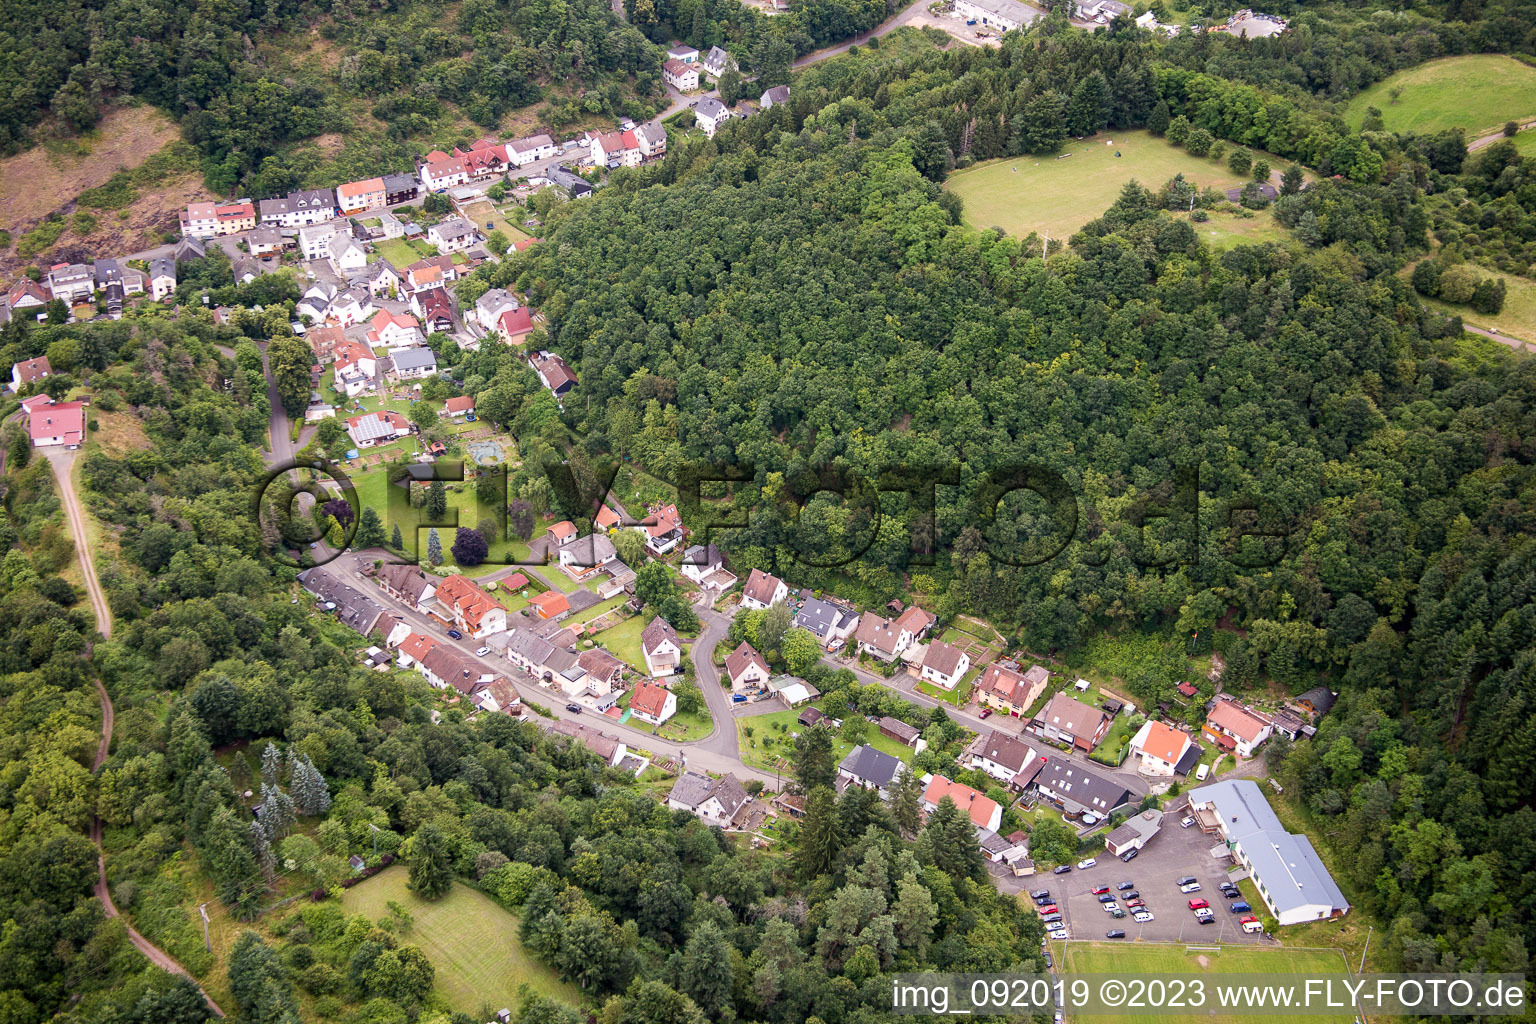 Kirchenbollenbach in the state Rhineland-Palatinate, Germany